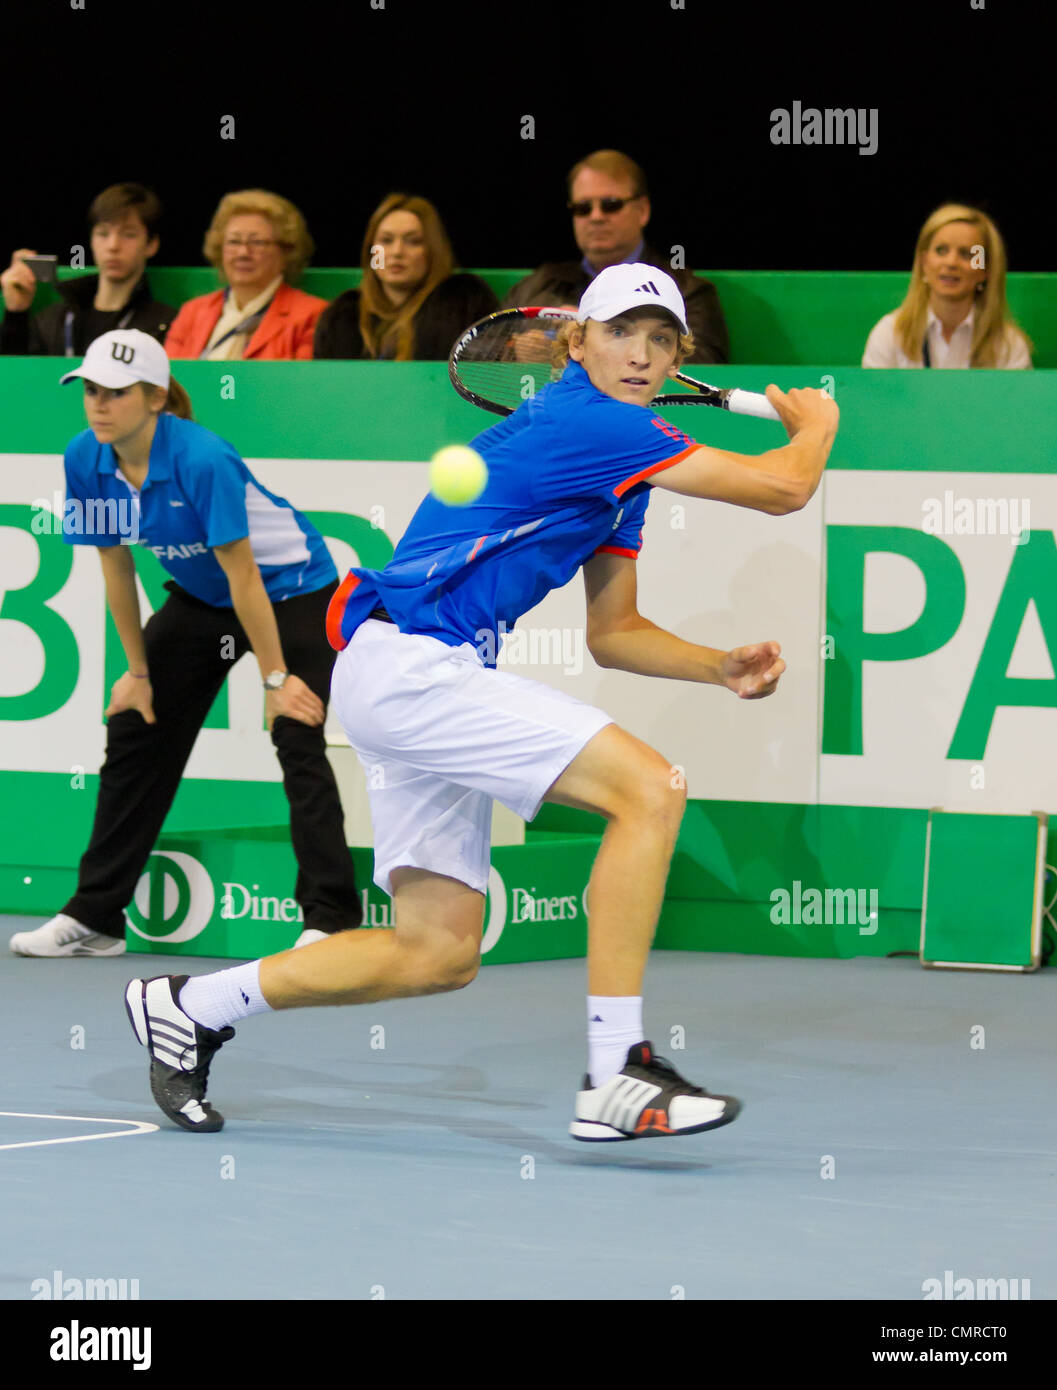 Mitchell Krueger plays tennis in final of BNP Paribas Open Champions Tour against Kyle Edmund in Zurich, SUI Stock Photo